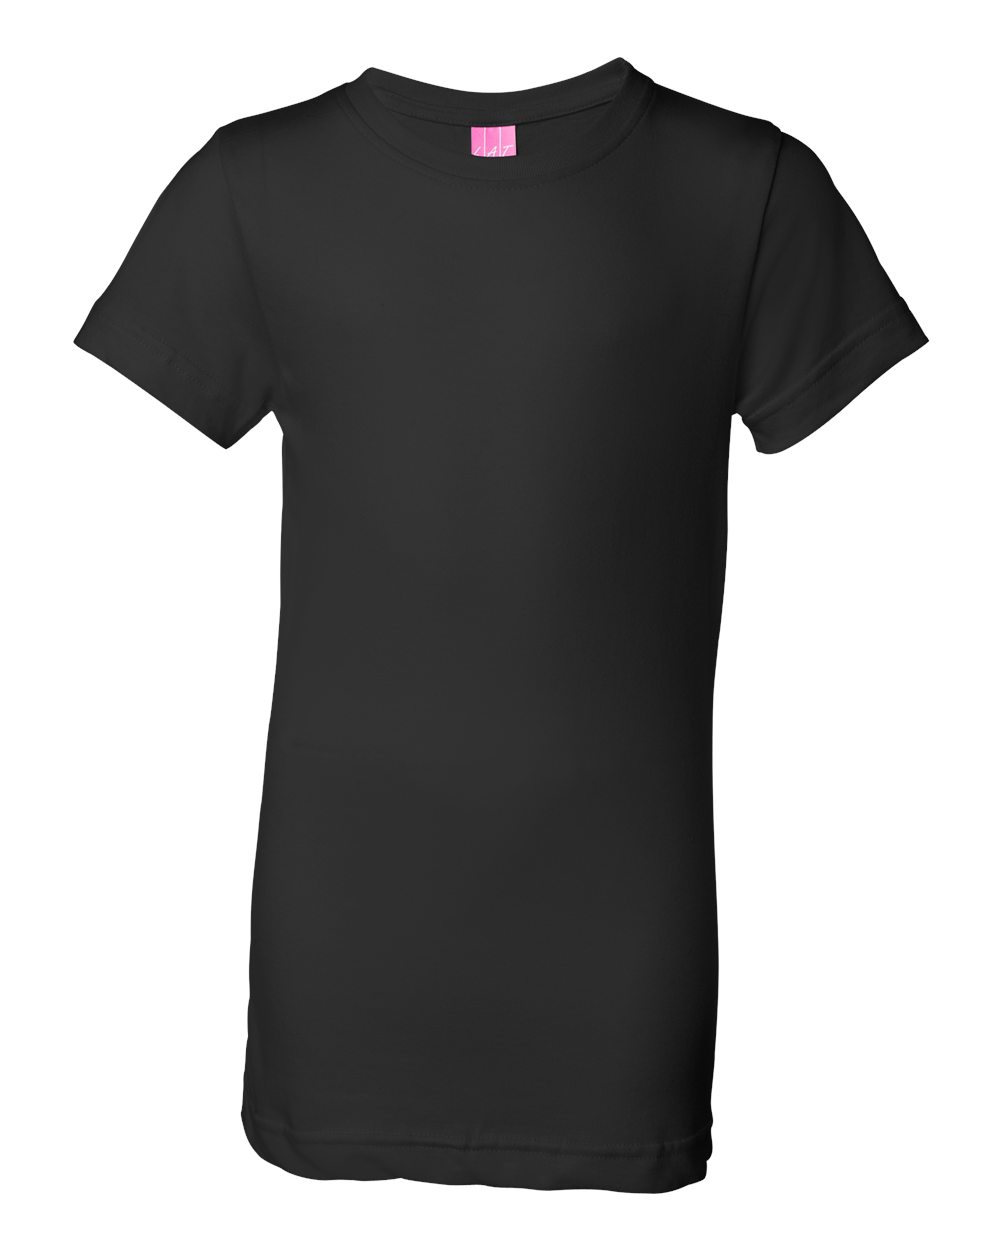 Girls' Fine Jersey T-Shirt - image 1 of 2